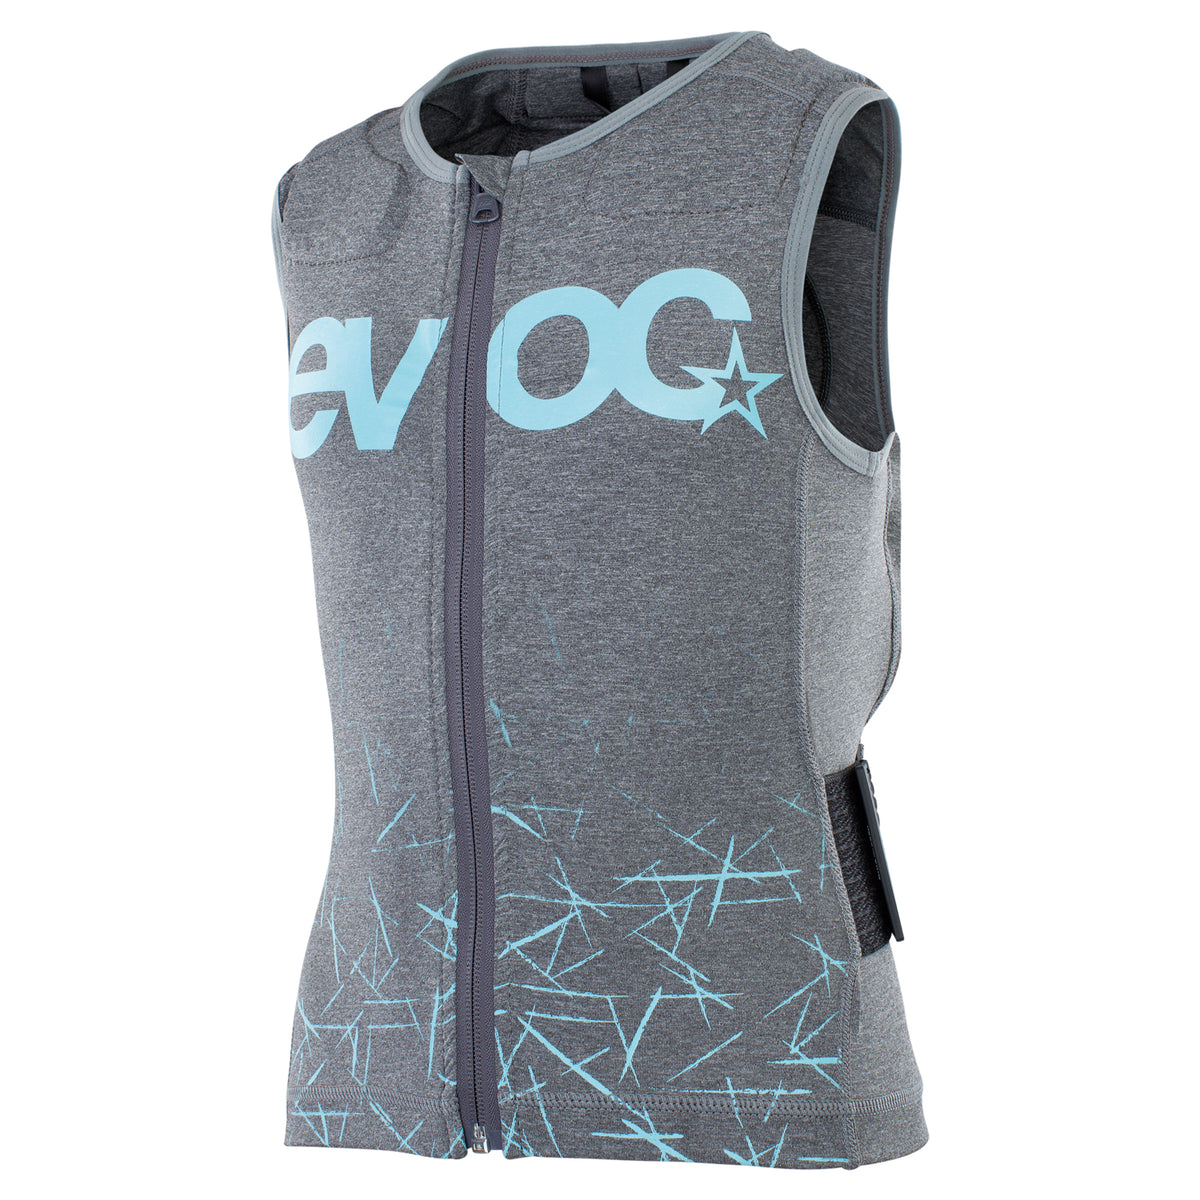 Evoc Kid's Protector Vest Carbon Grey M